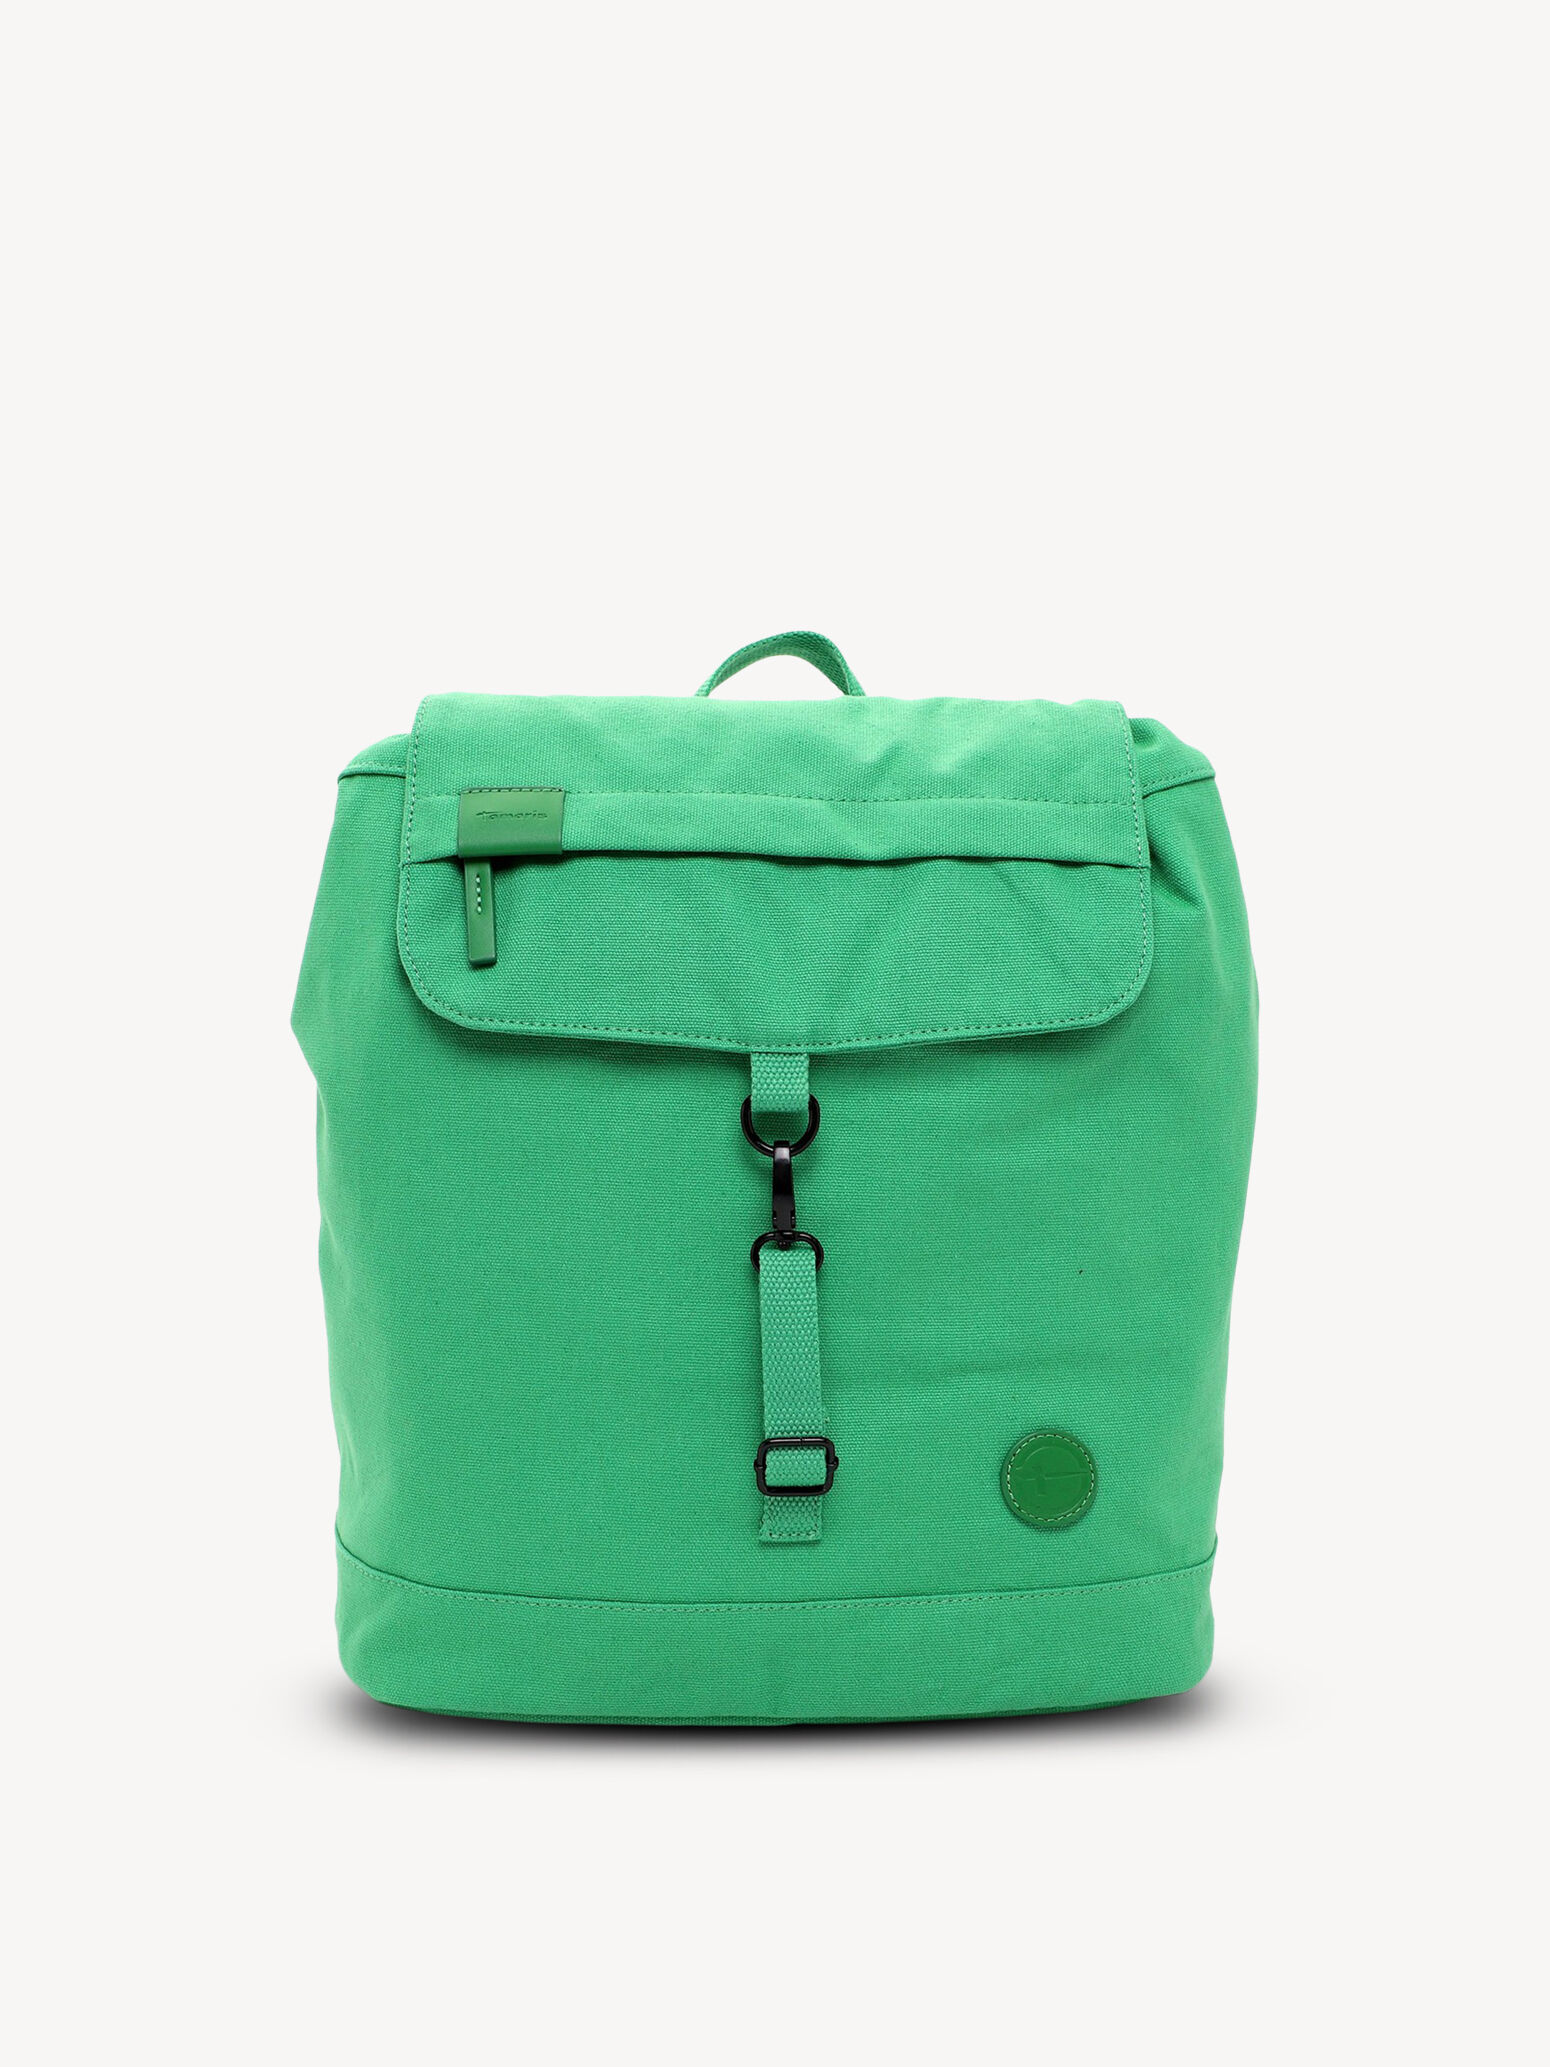 Elegant apple logo bag For Stylish And Trendy Looks - Alibaba.com